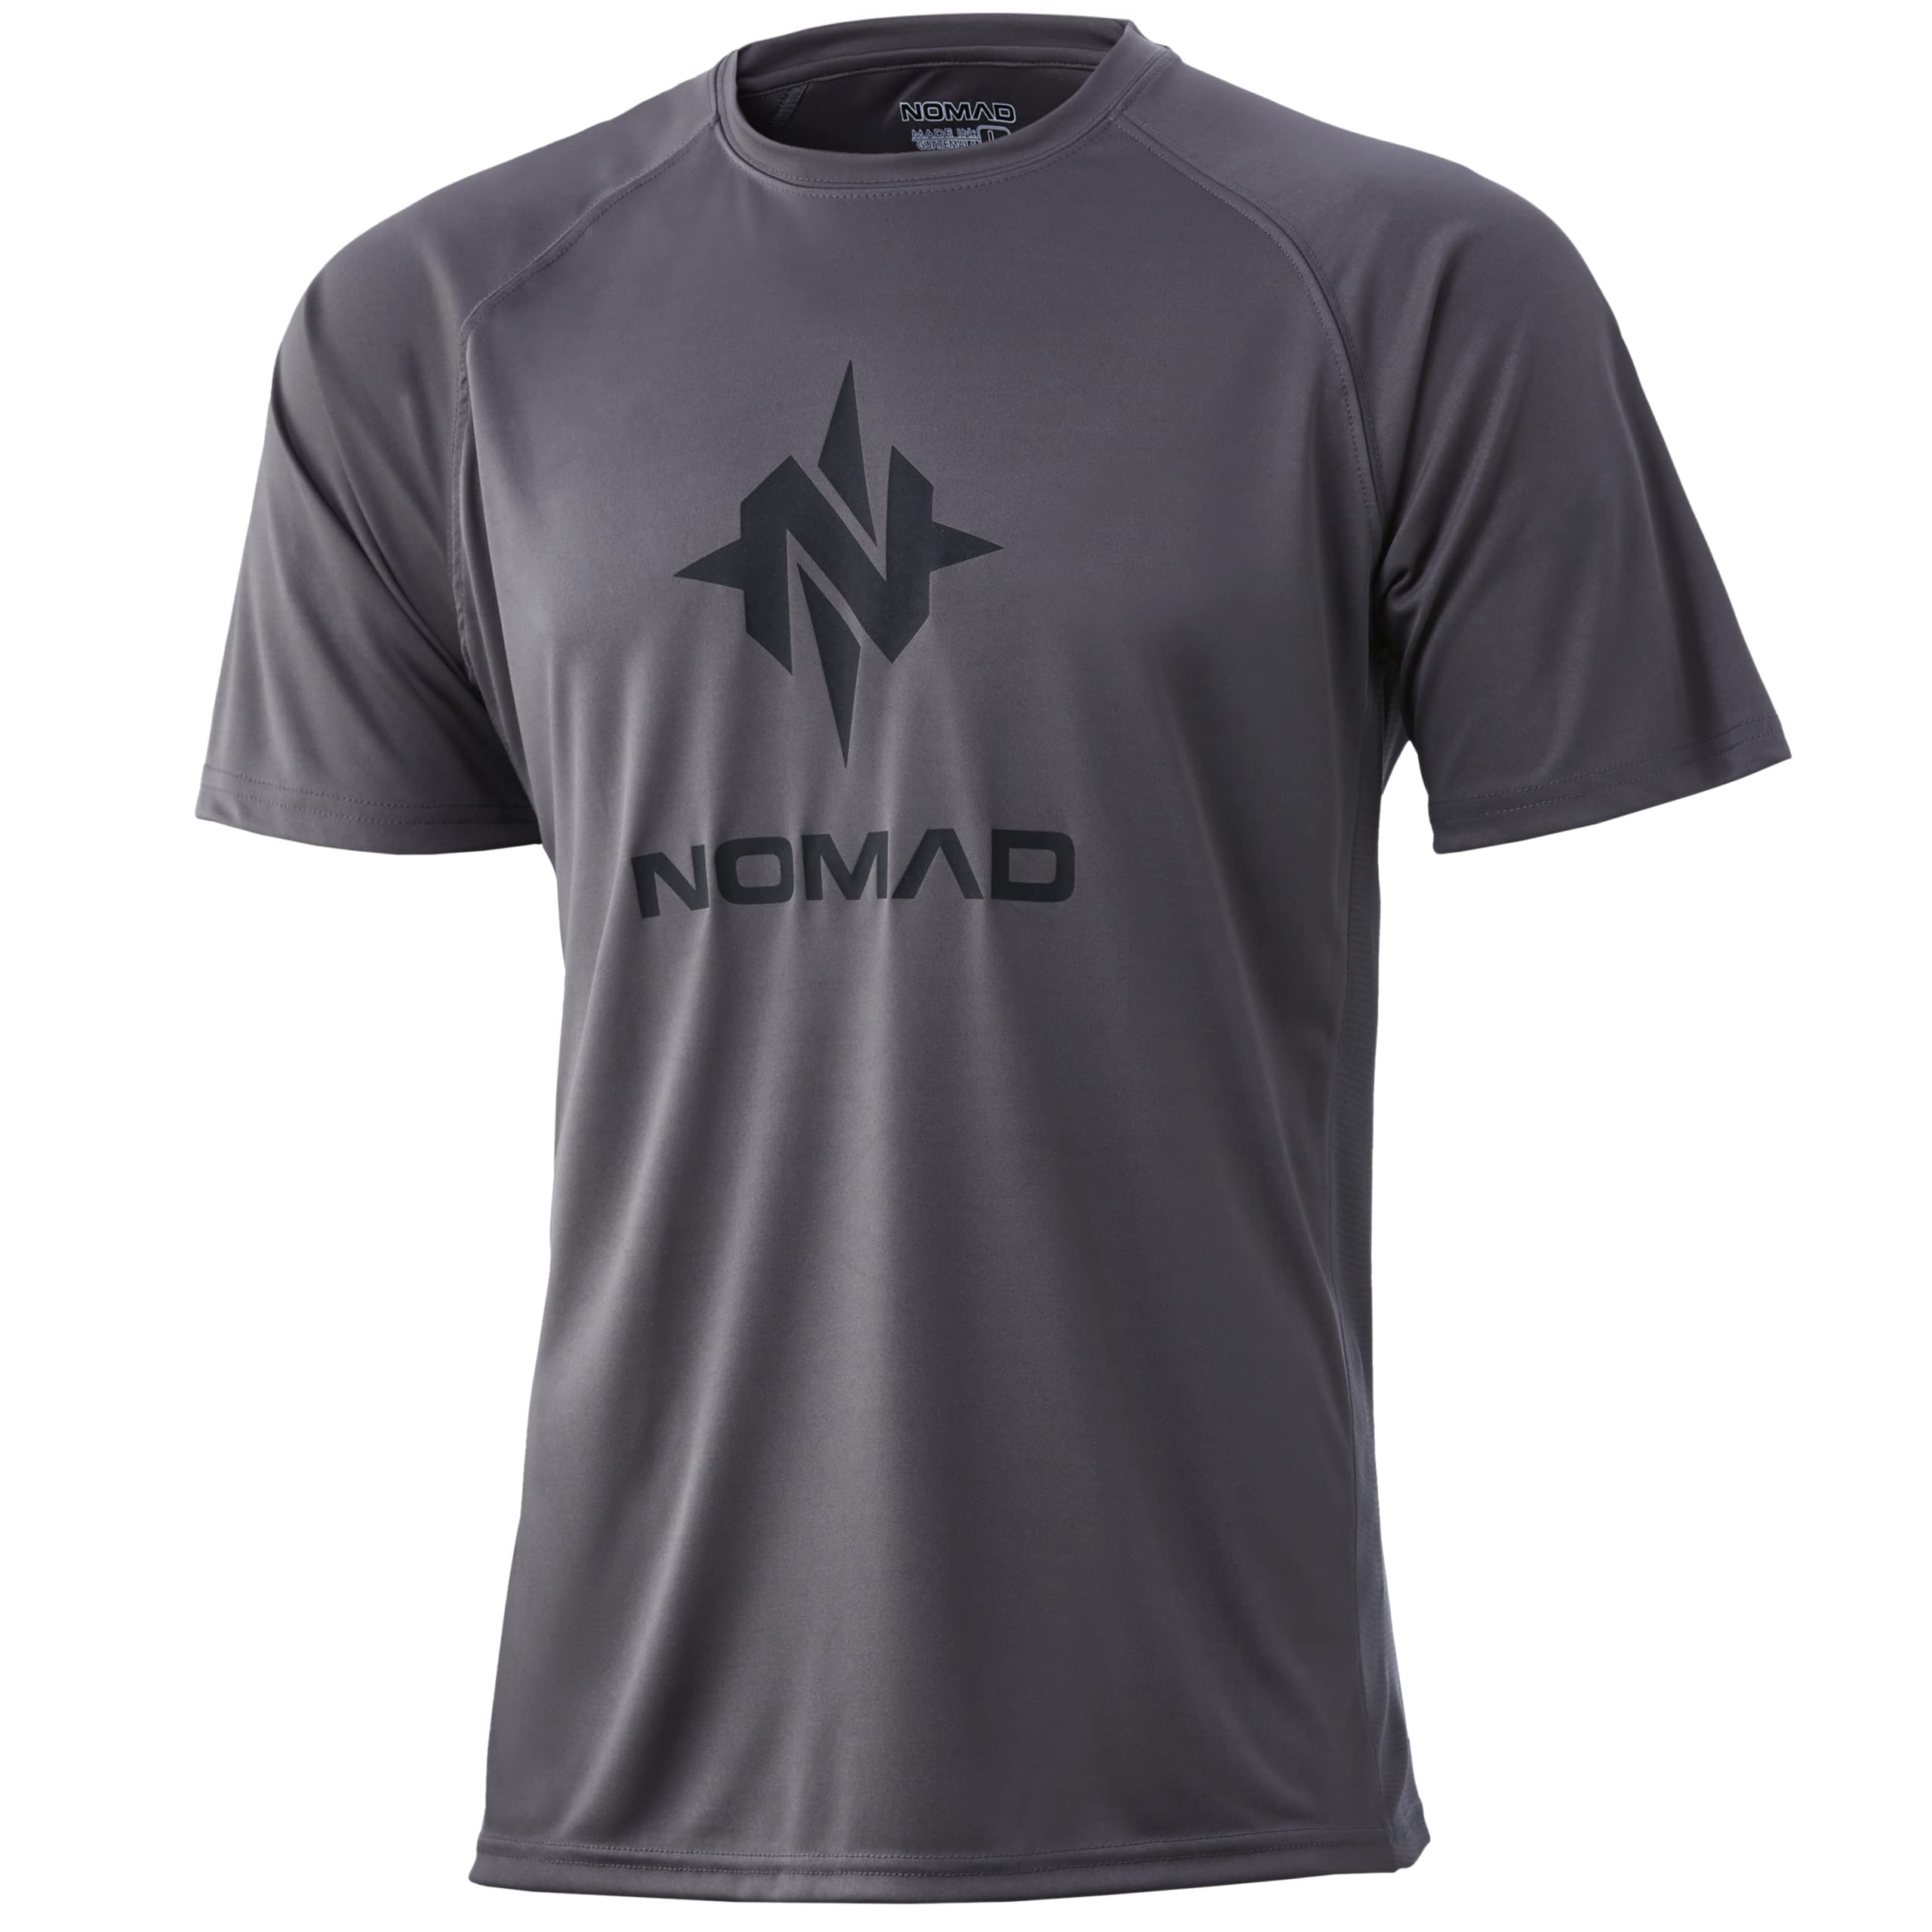 Nomad Men's Pursuit Short Sleeve, Hunting Shirt W/Sun Protection